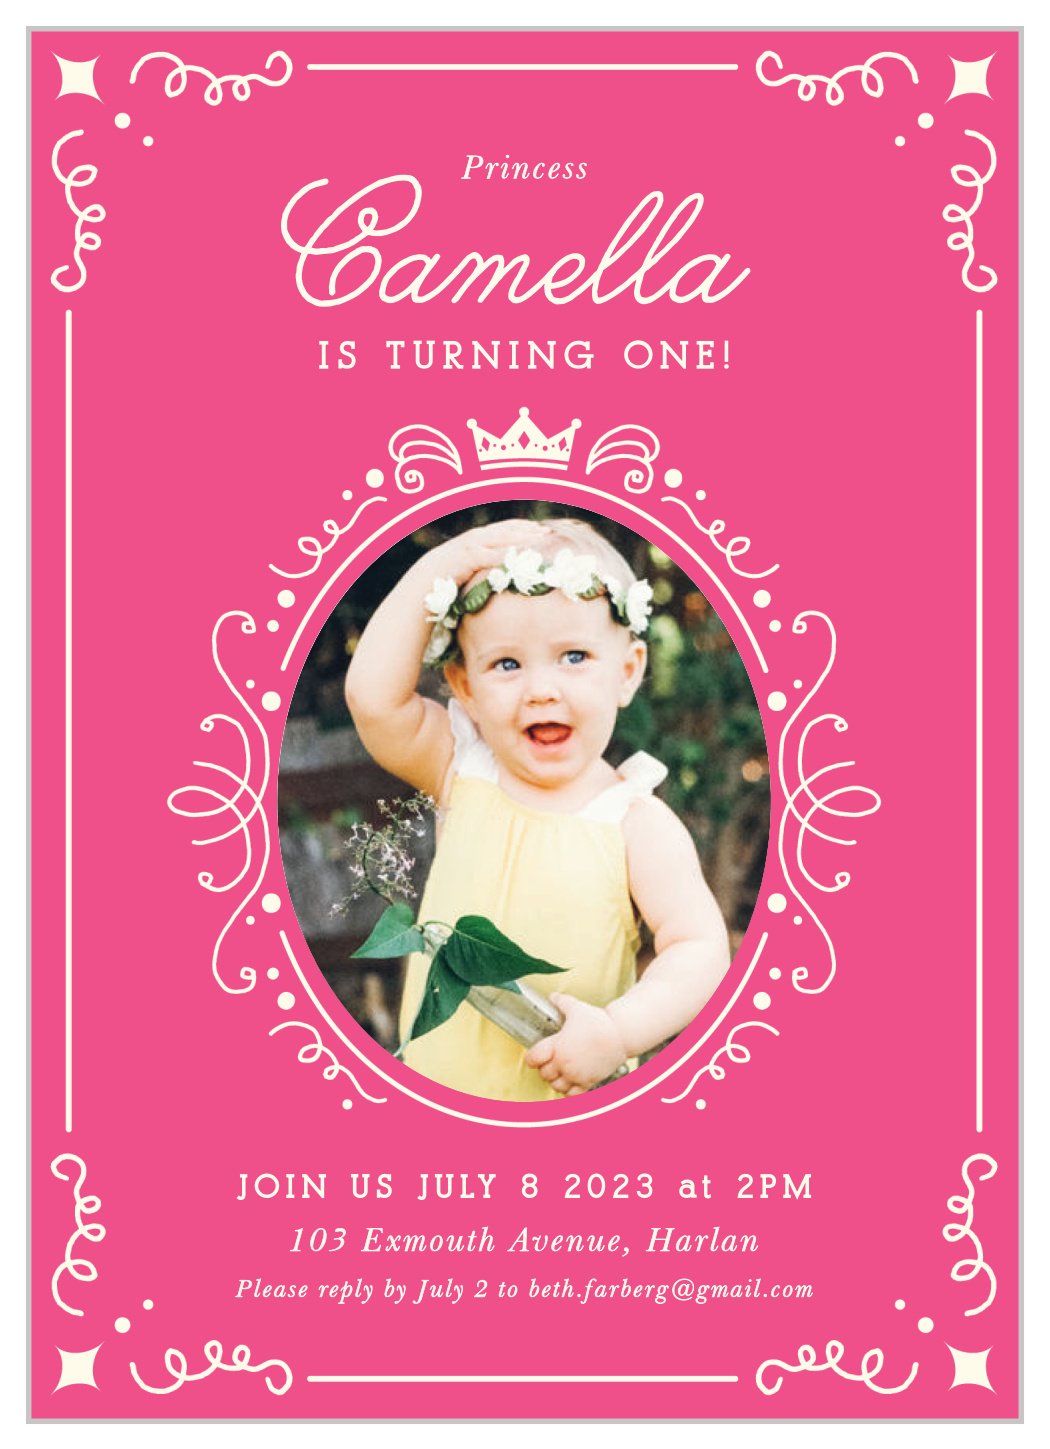 Little Miss First Birthday Invitations